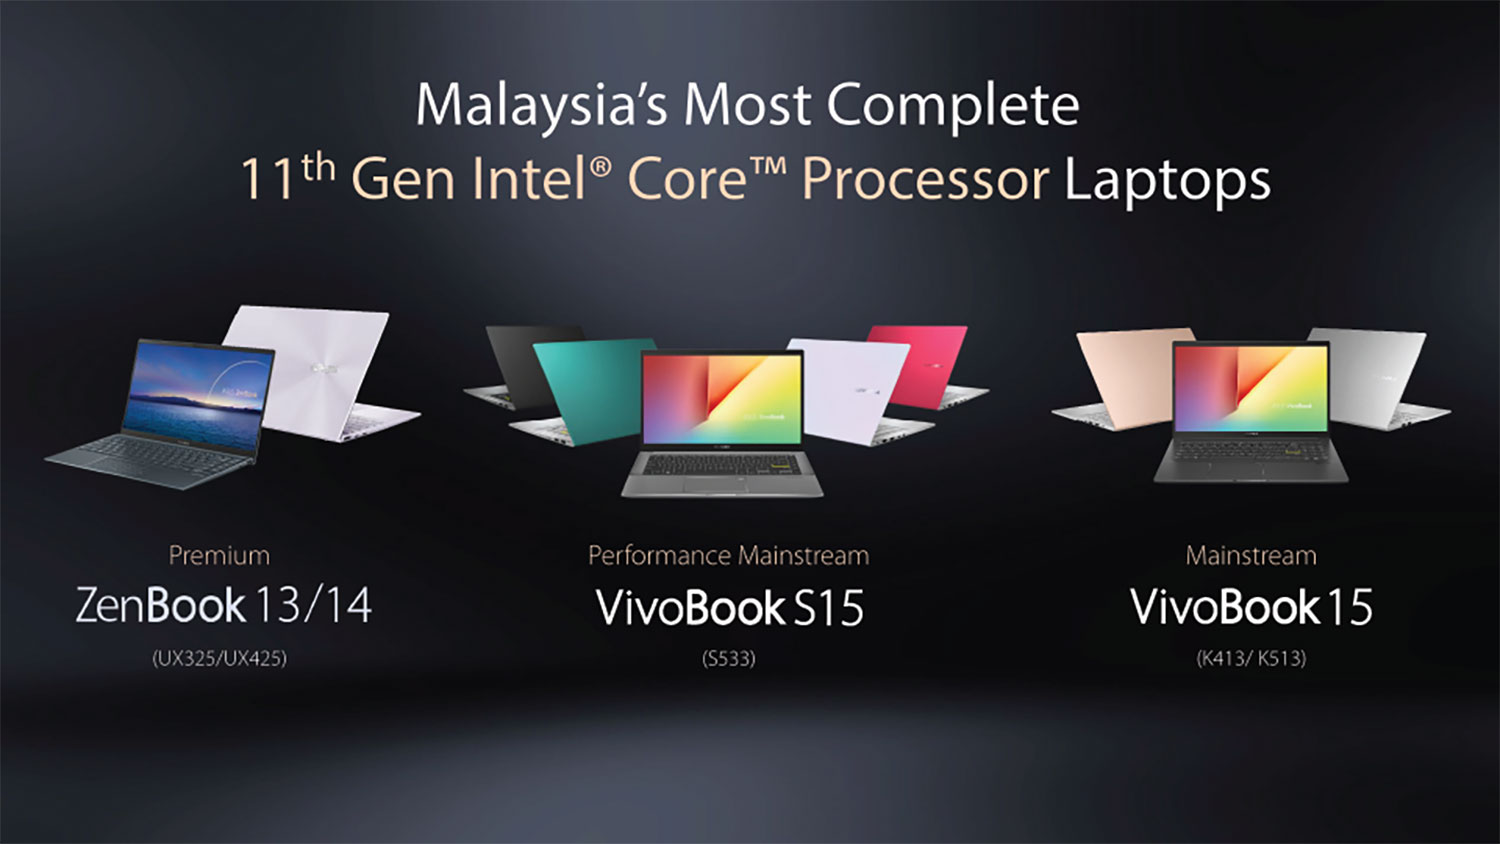 ASUS 11th Gen Intel Core Processor Laptops Are Here